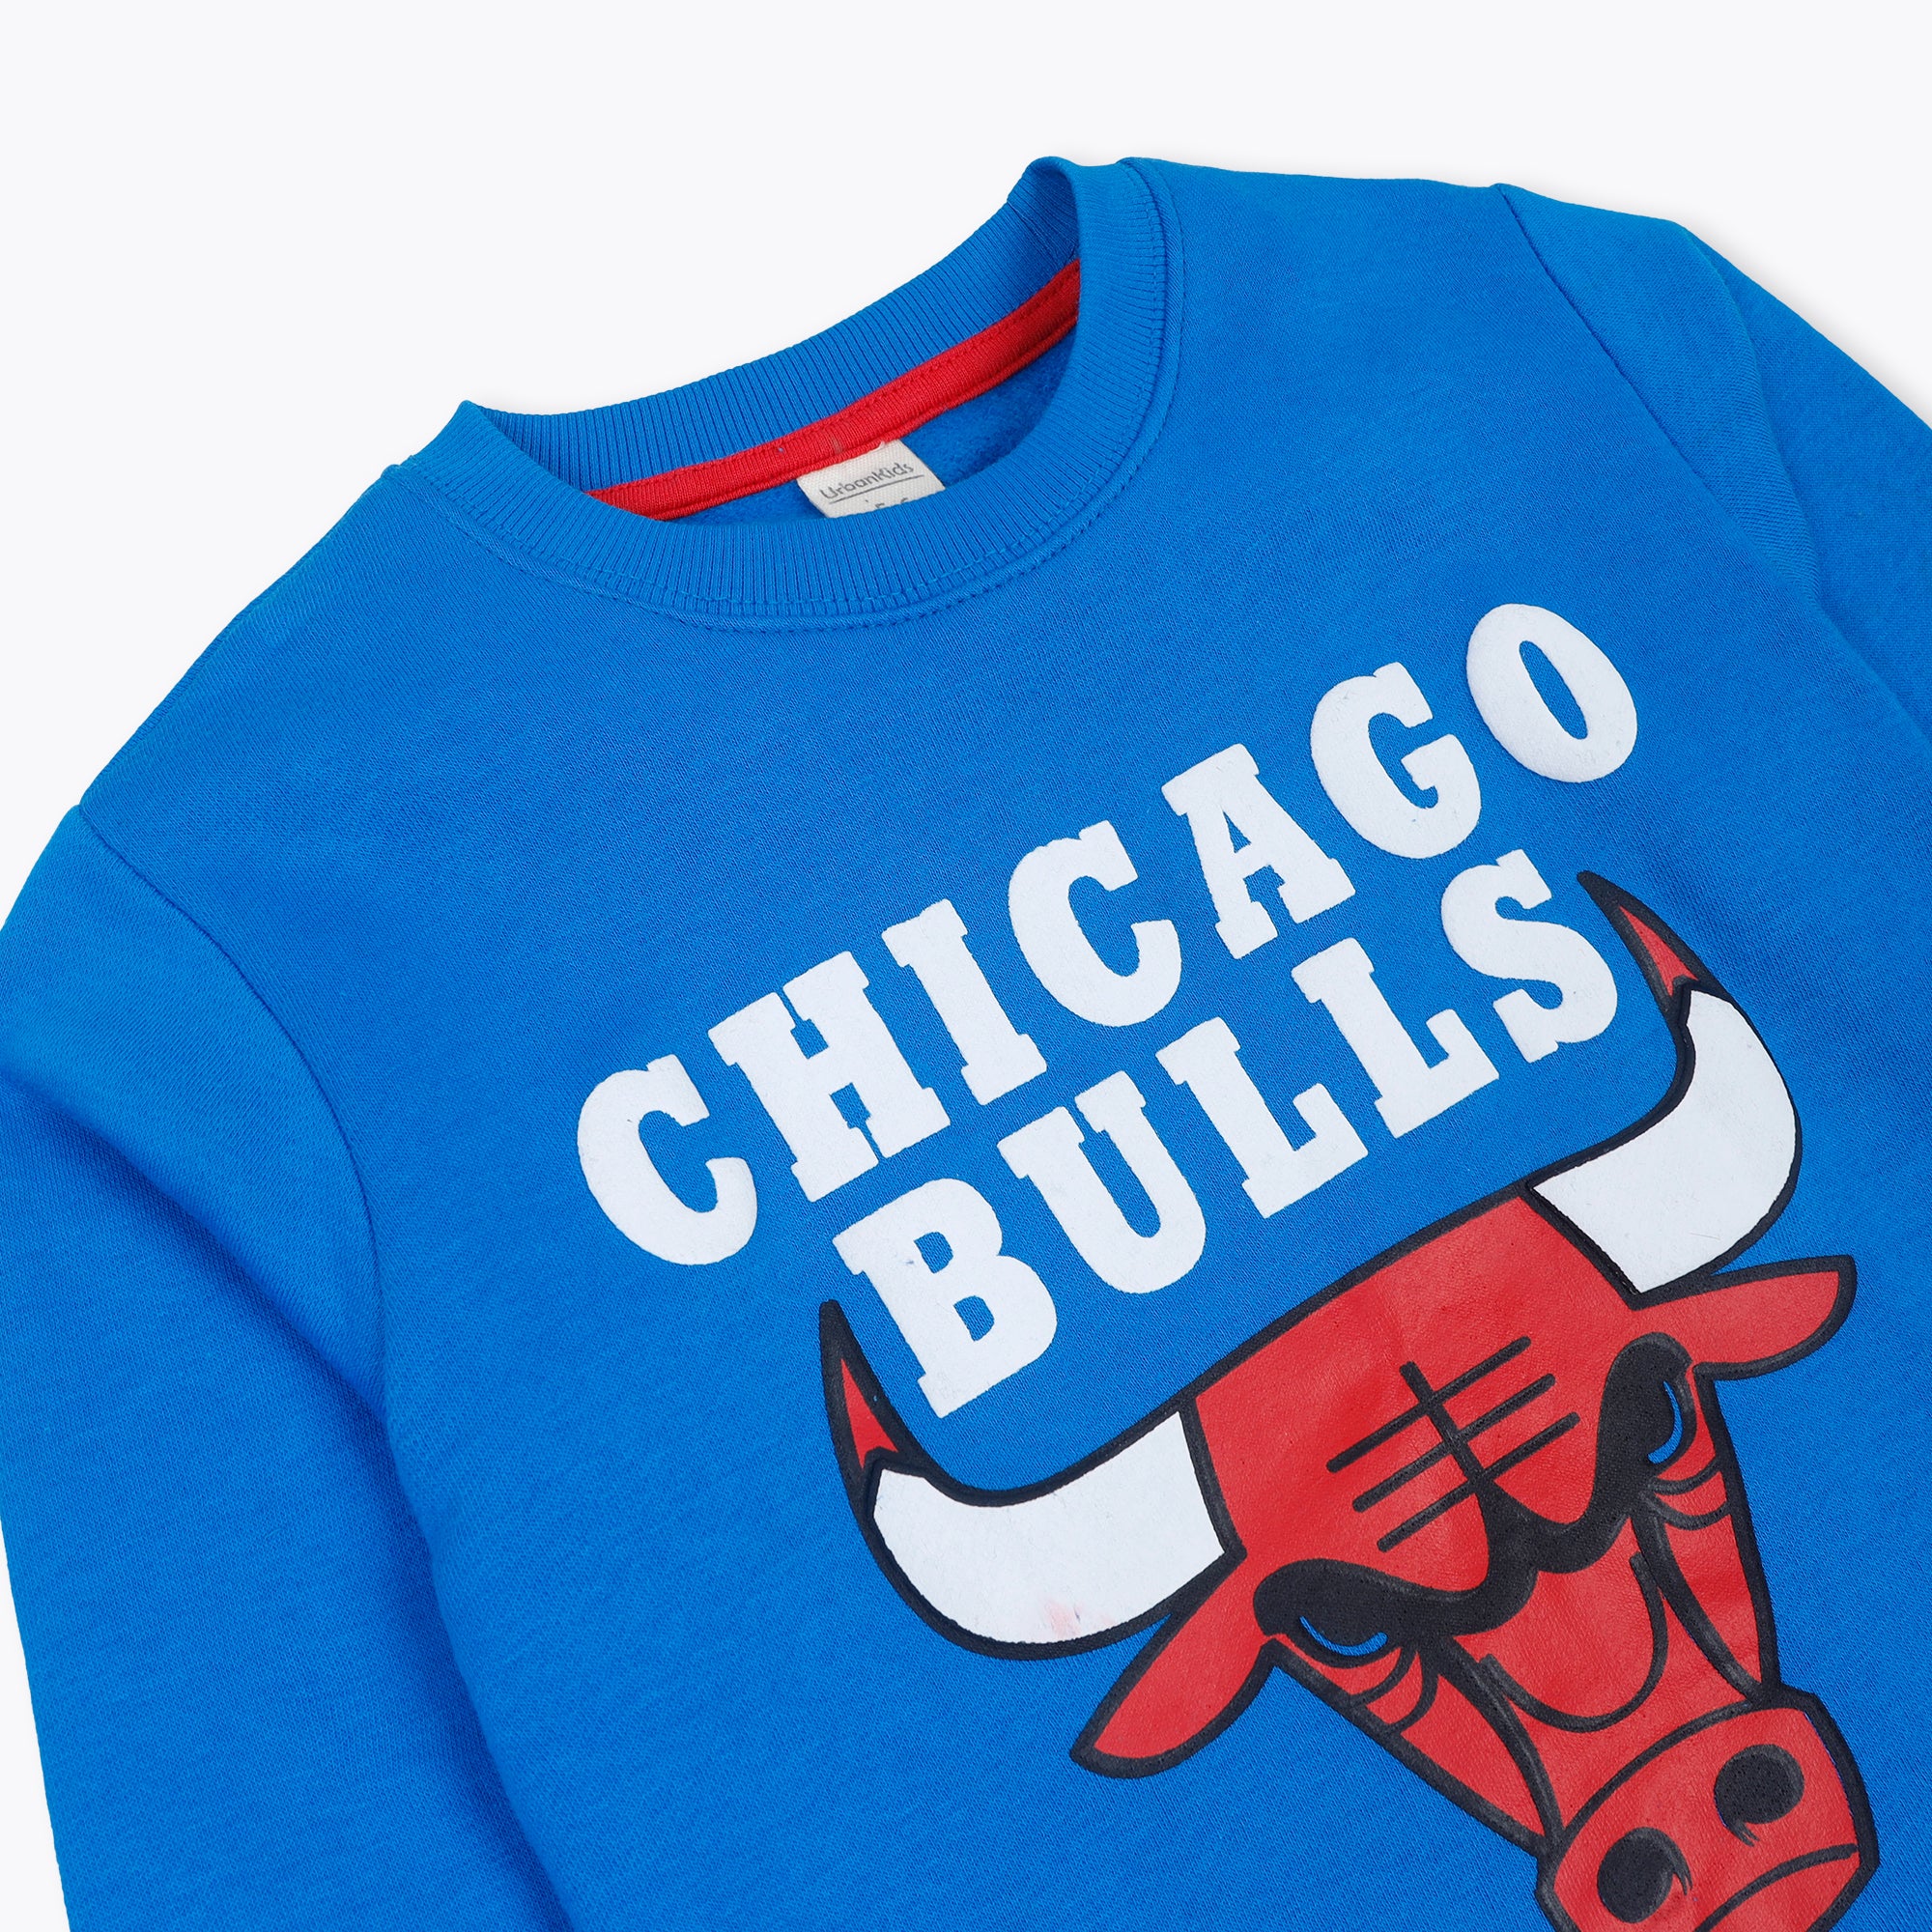 Chicago Bulls Sweatsuit